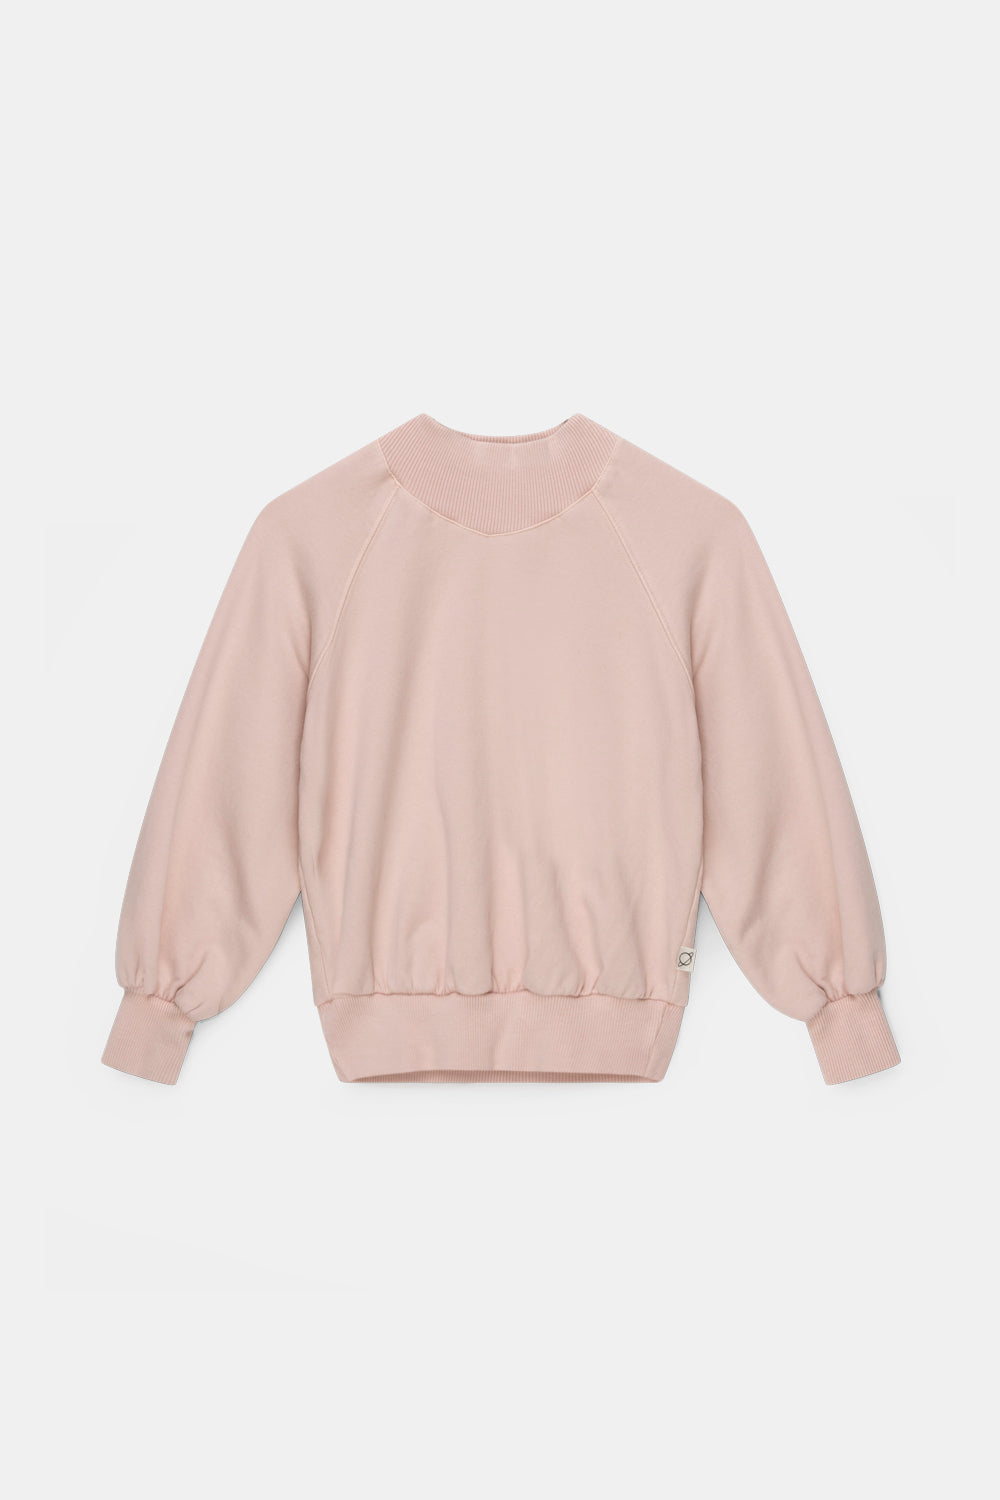 Soft Pink Mock Neck Sweater